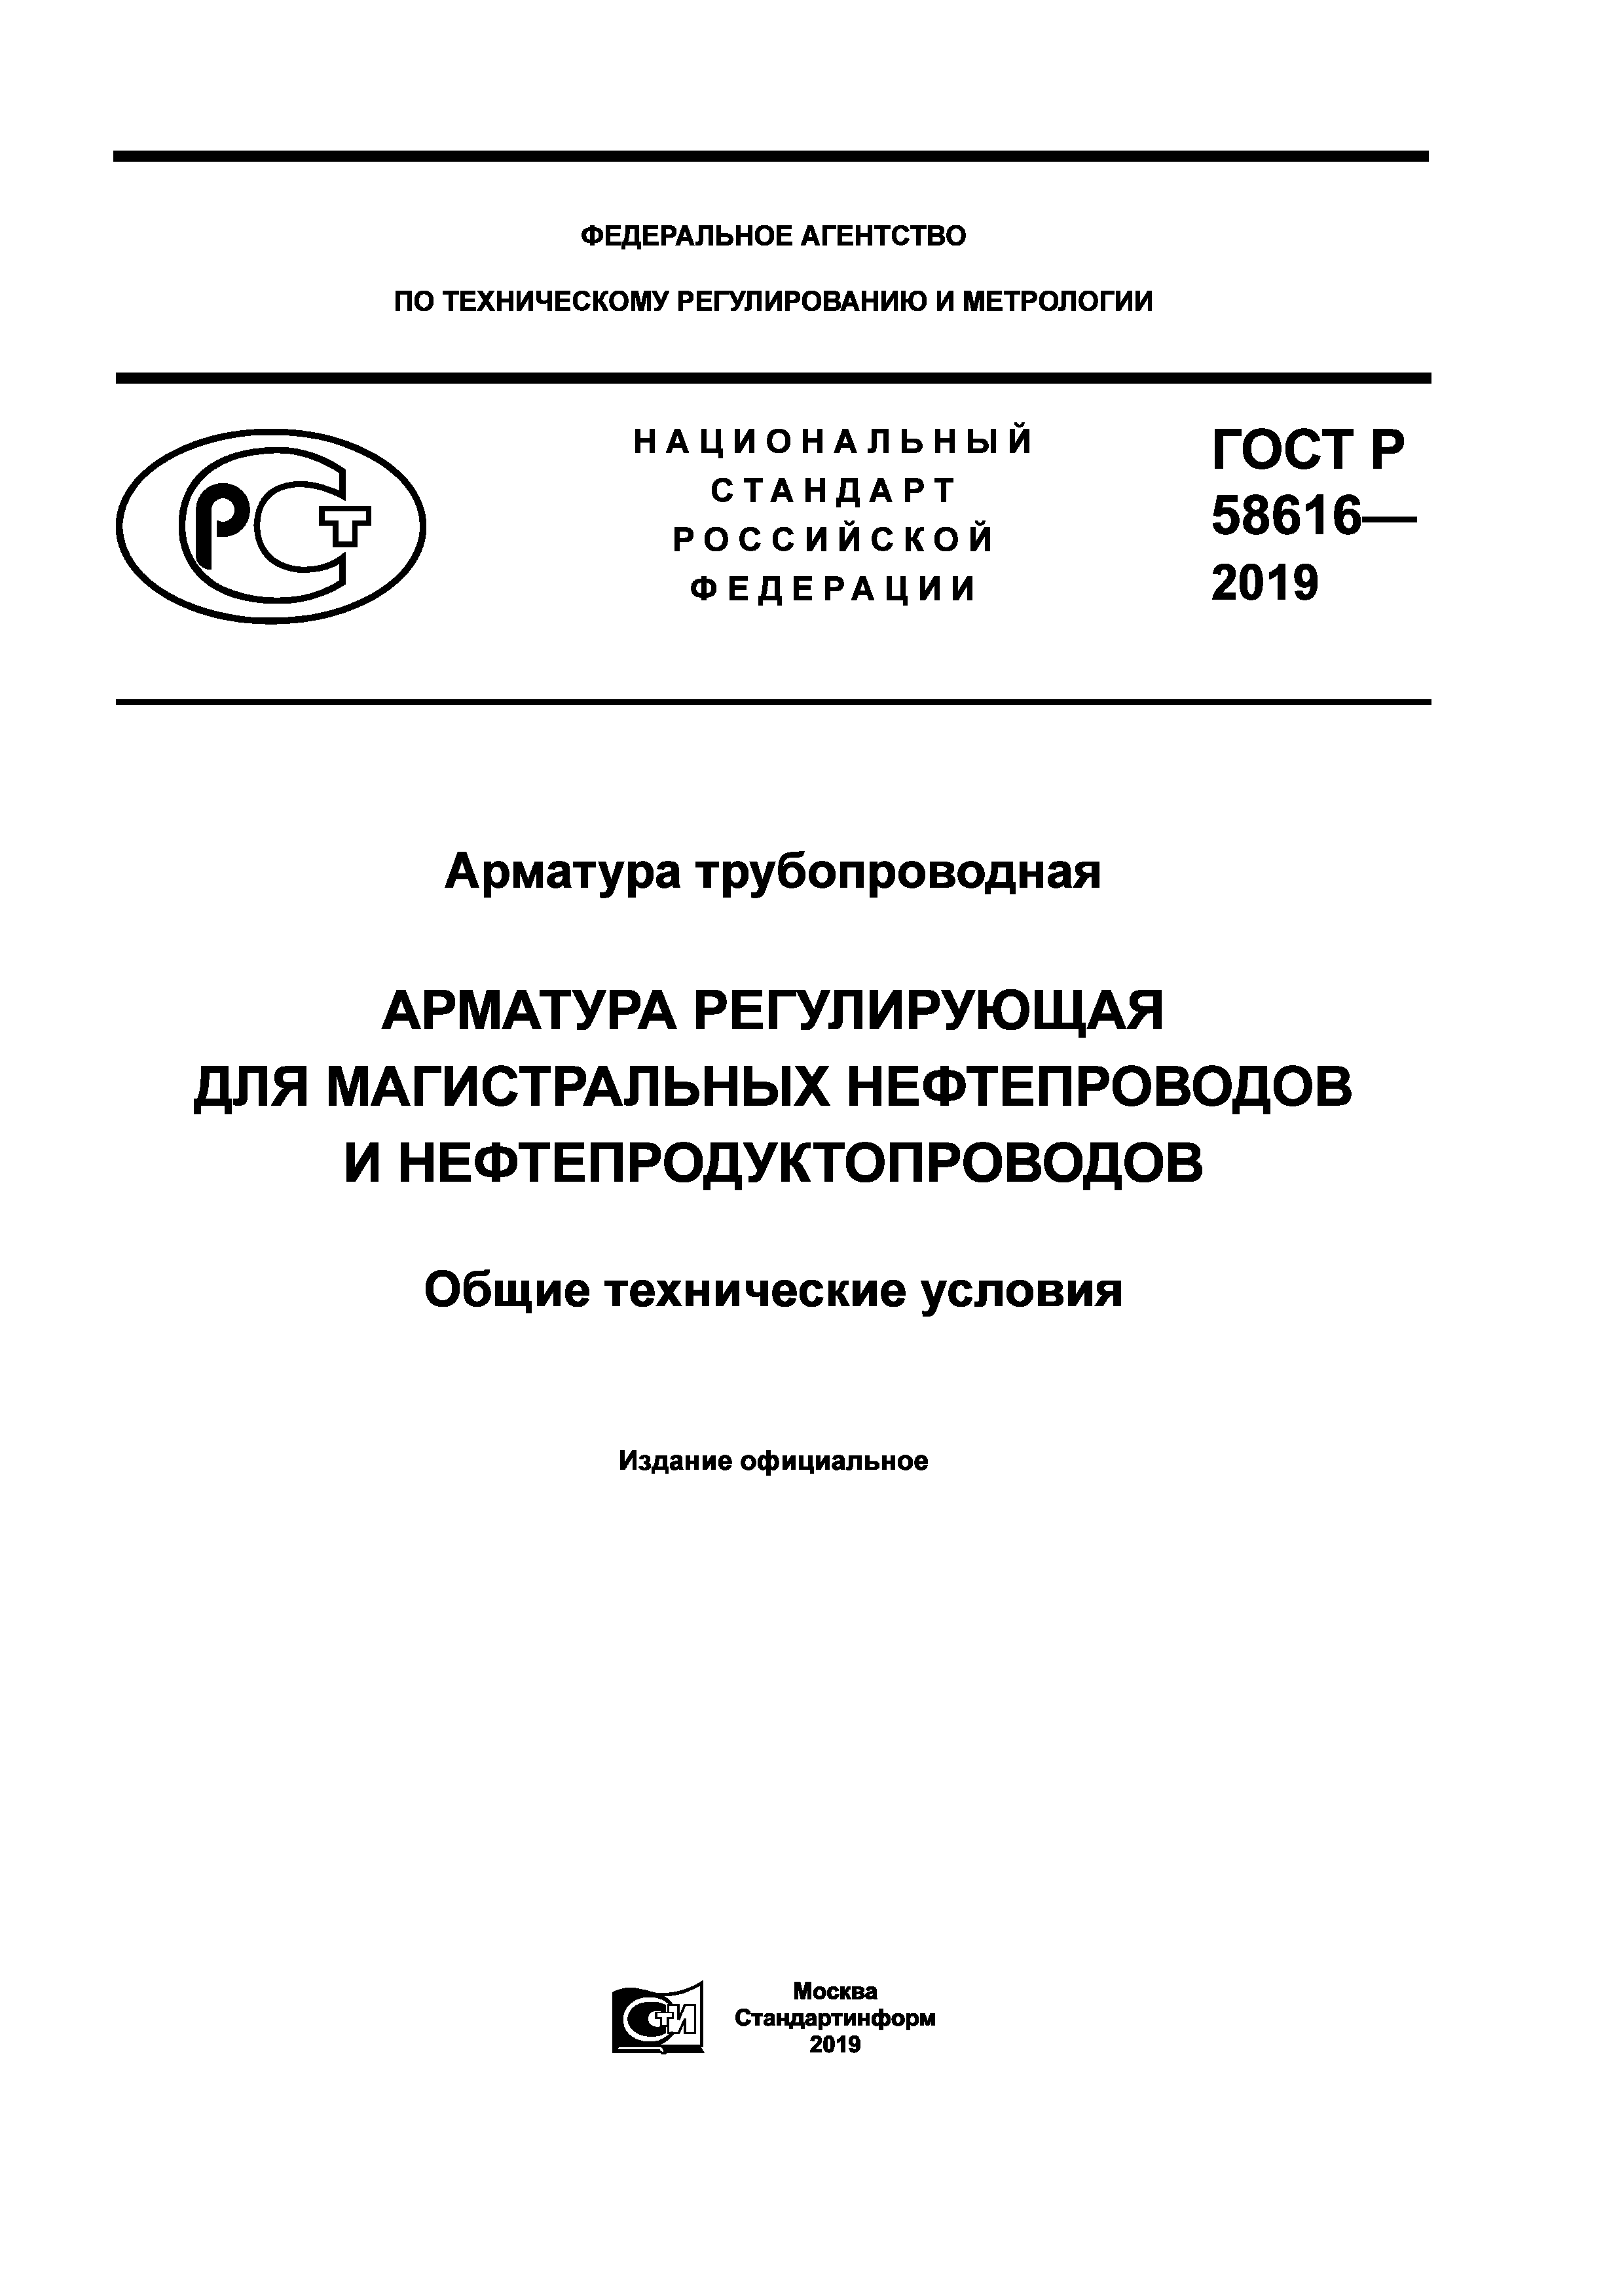 ГОСТ Р 58616-2019